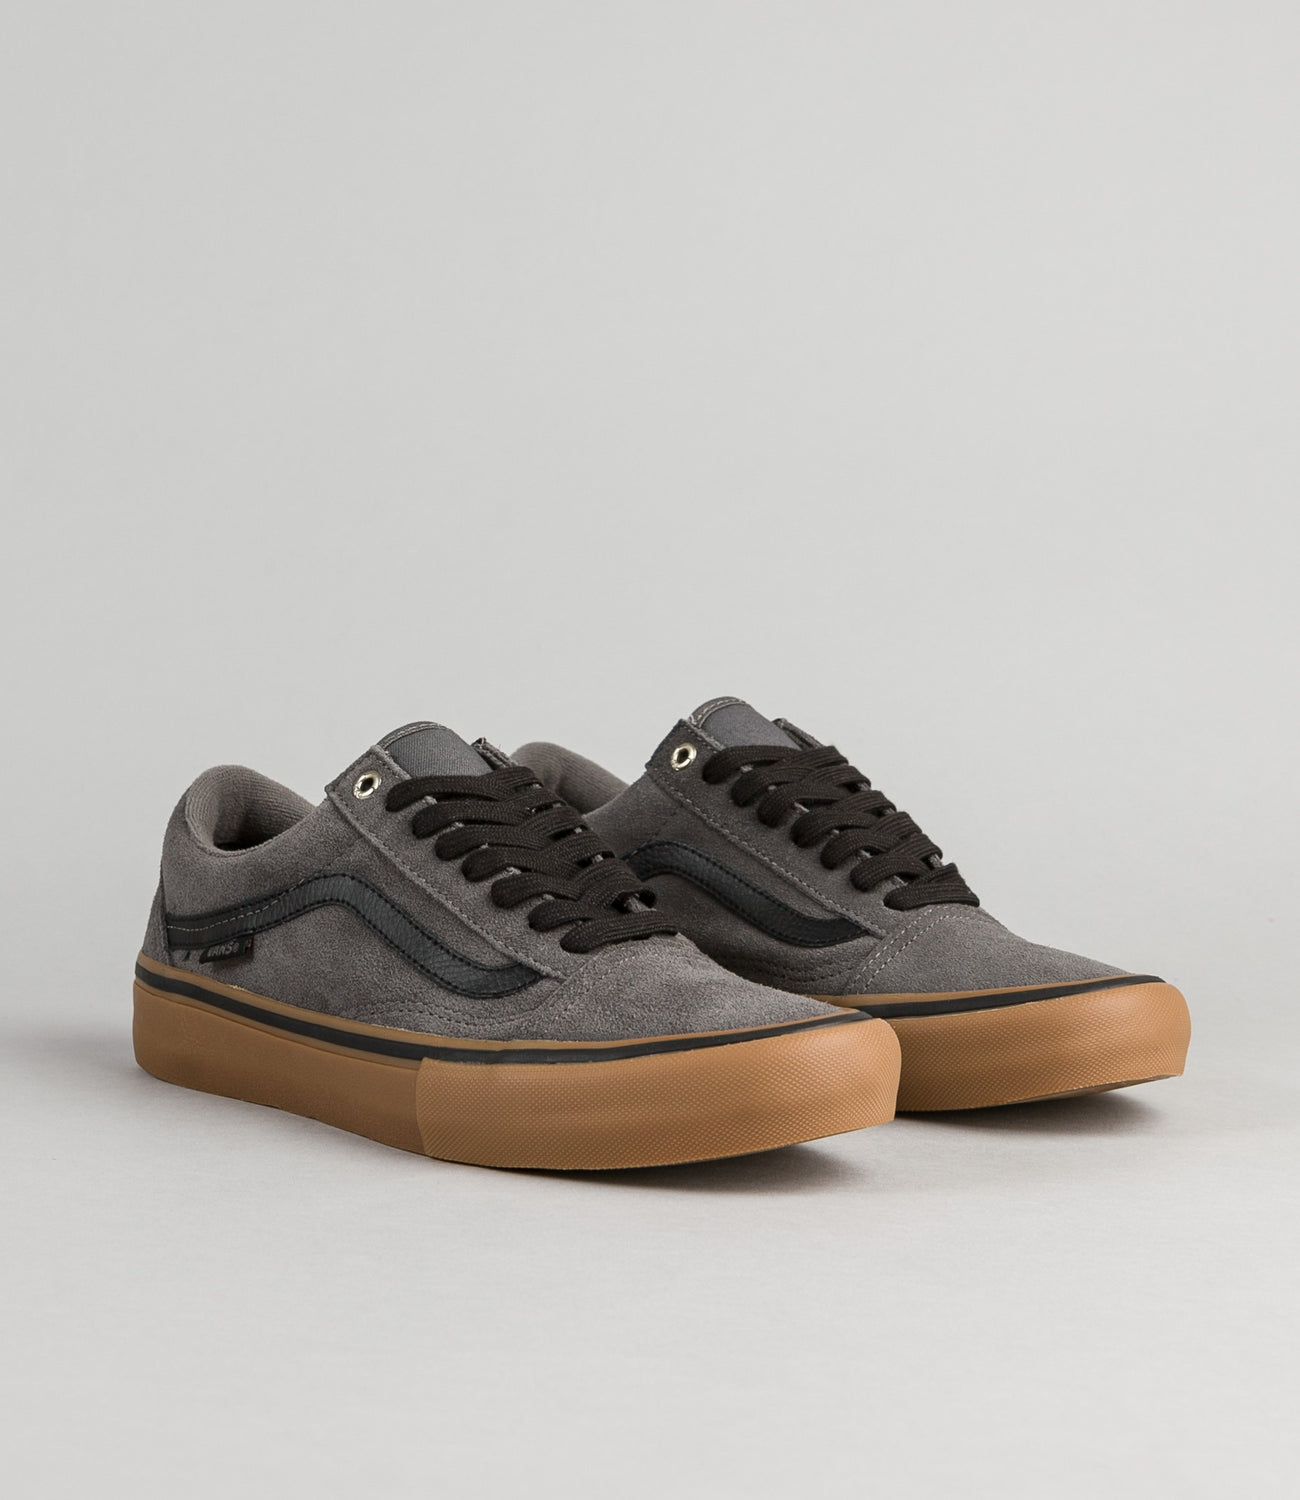 Et kors Blot Lee Vans Old Skool Pro Shoes - Grey / Black / Gum | Flatspot